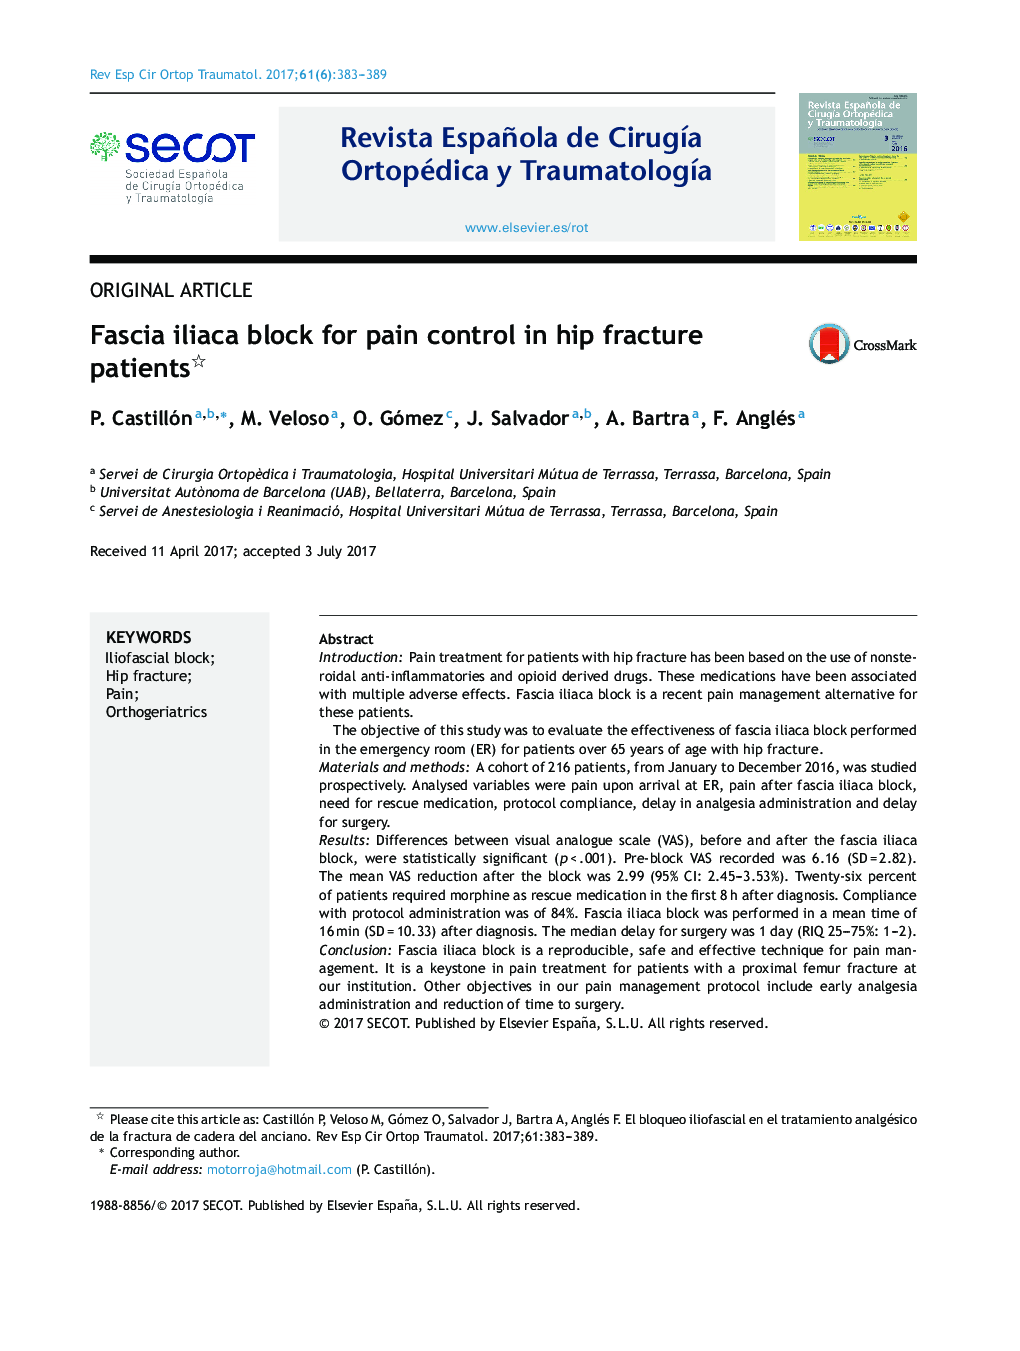 Fascia iliaca block for pain control in hip fracture patients